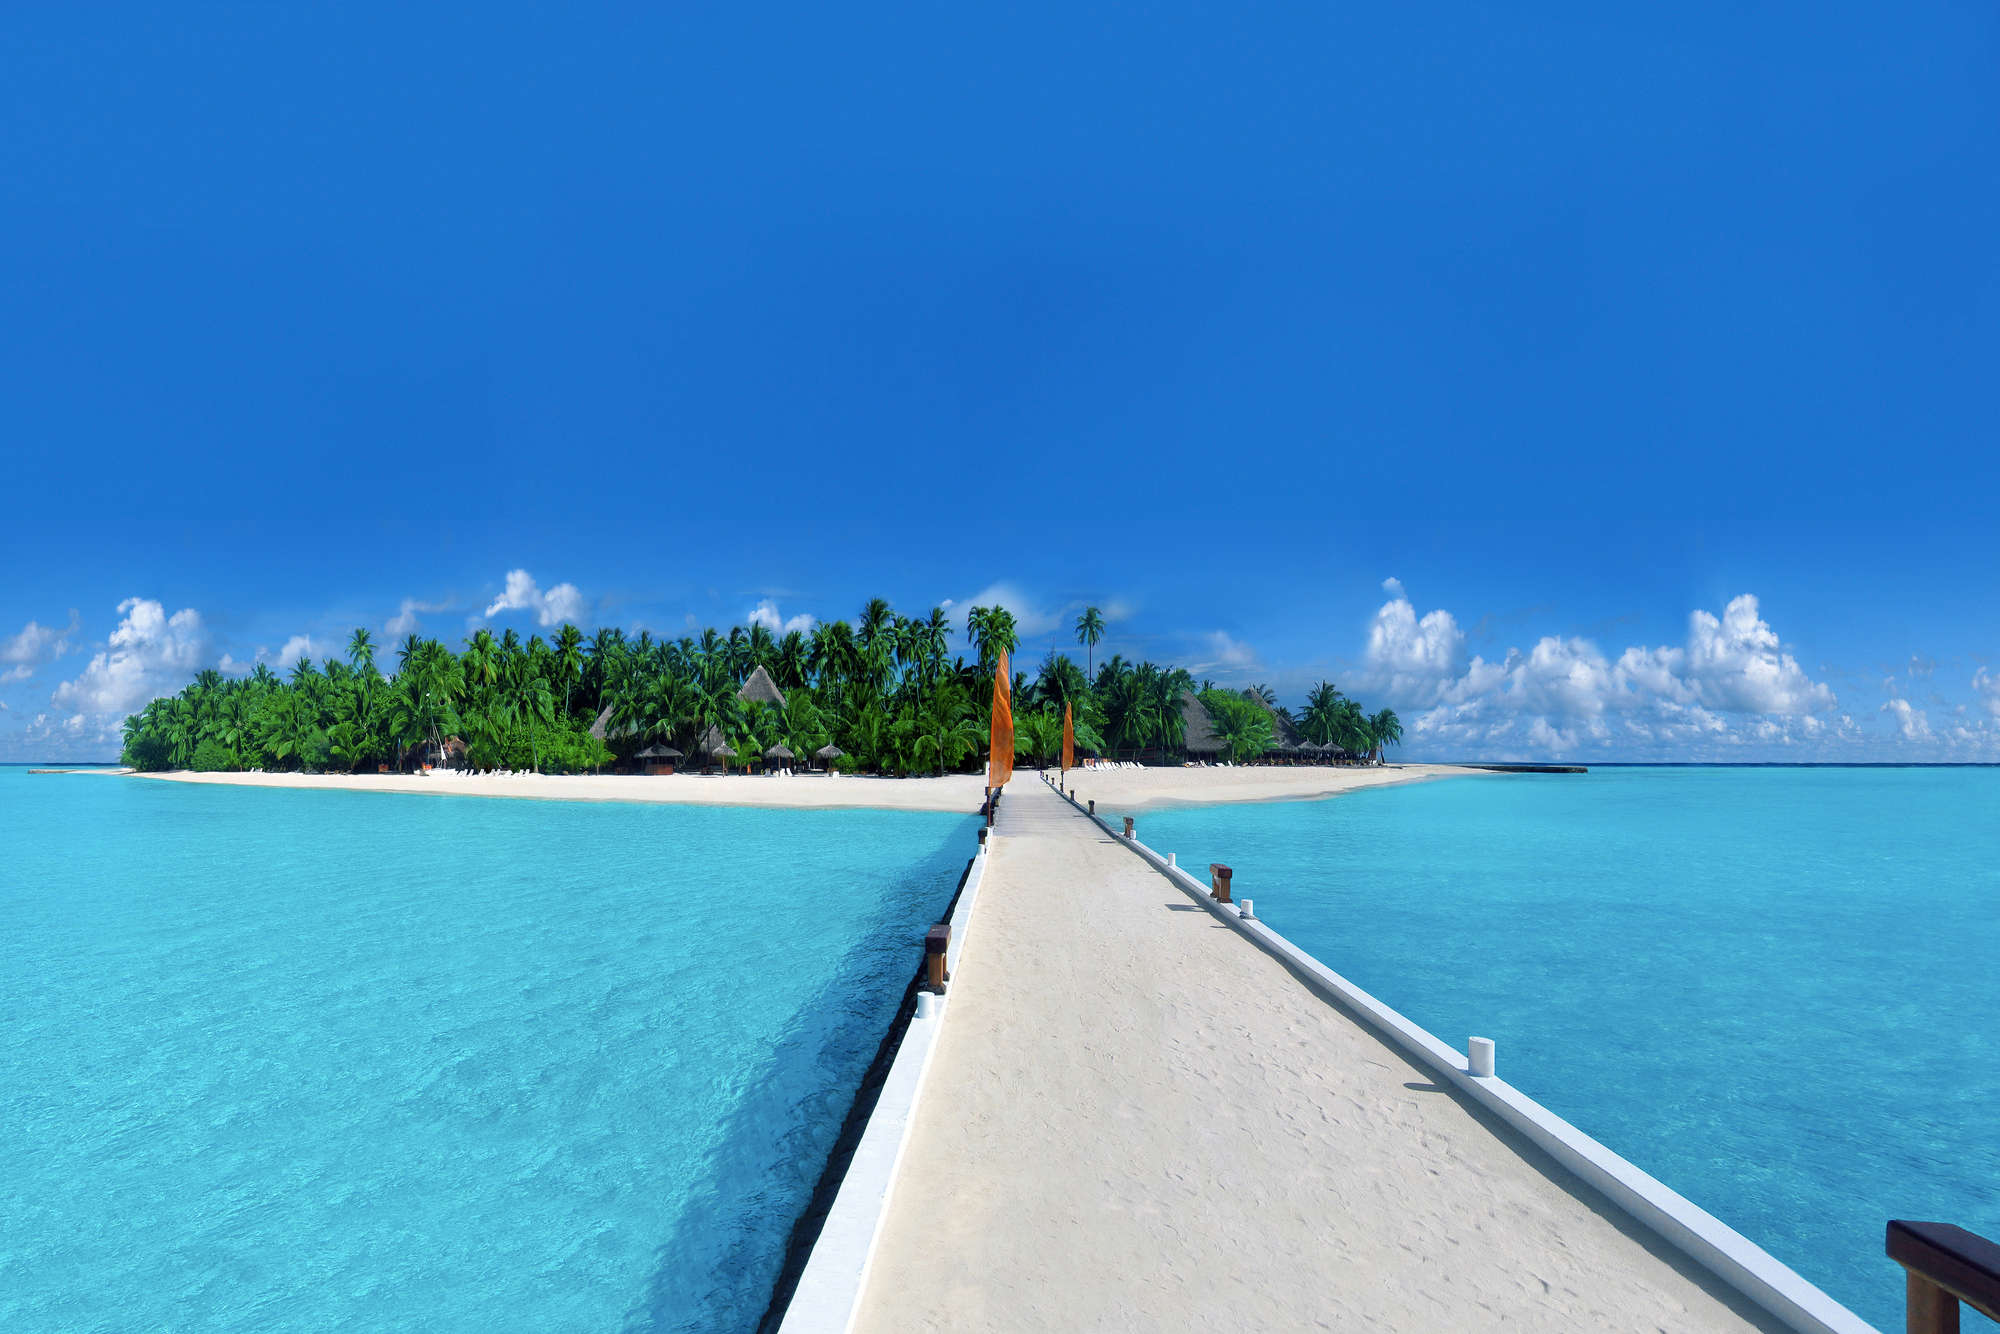             Island mural bridge to island with palm trees on premium smooth vinyl
        